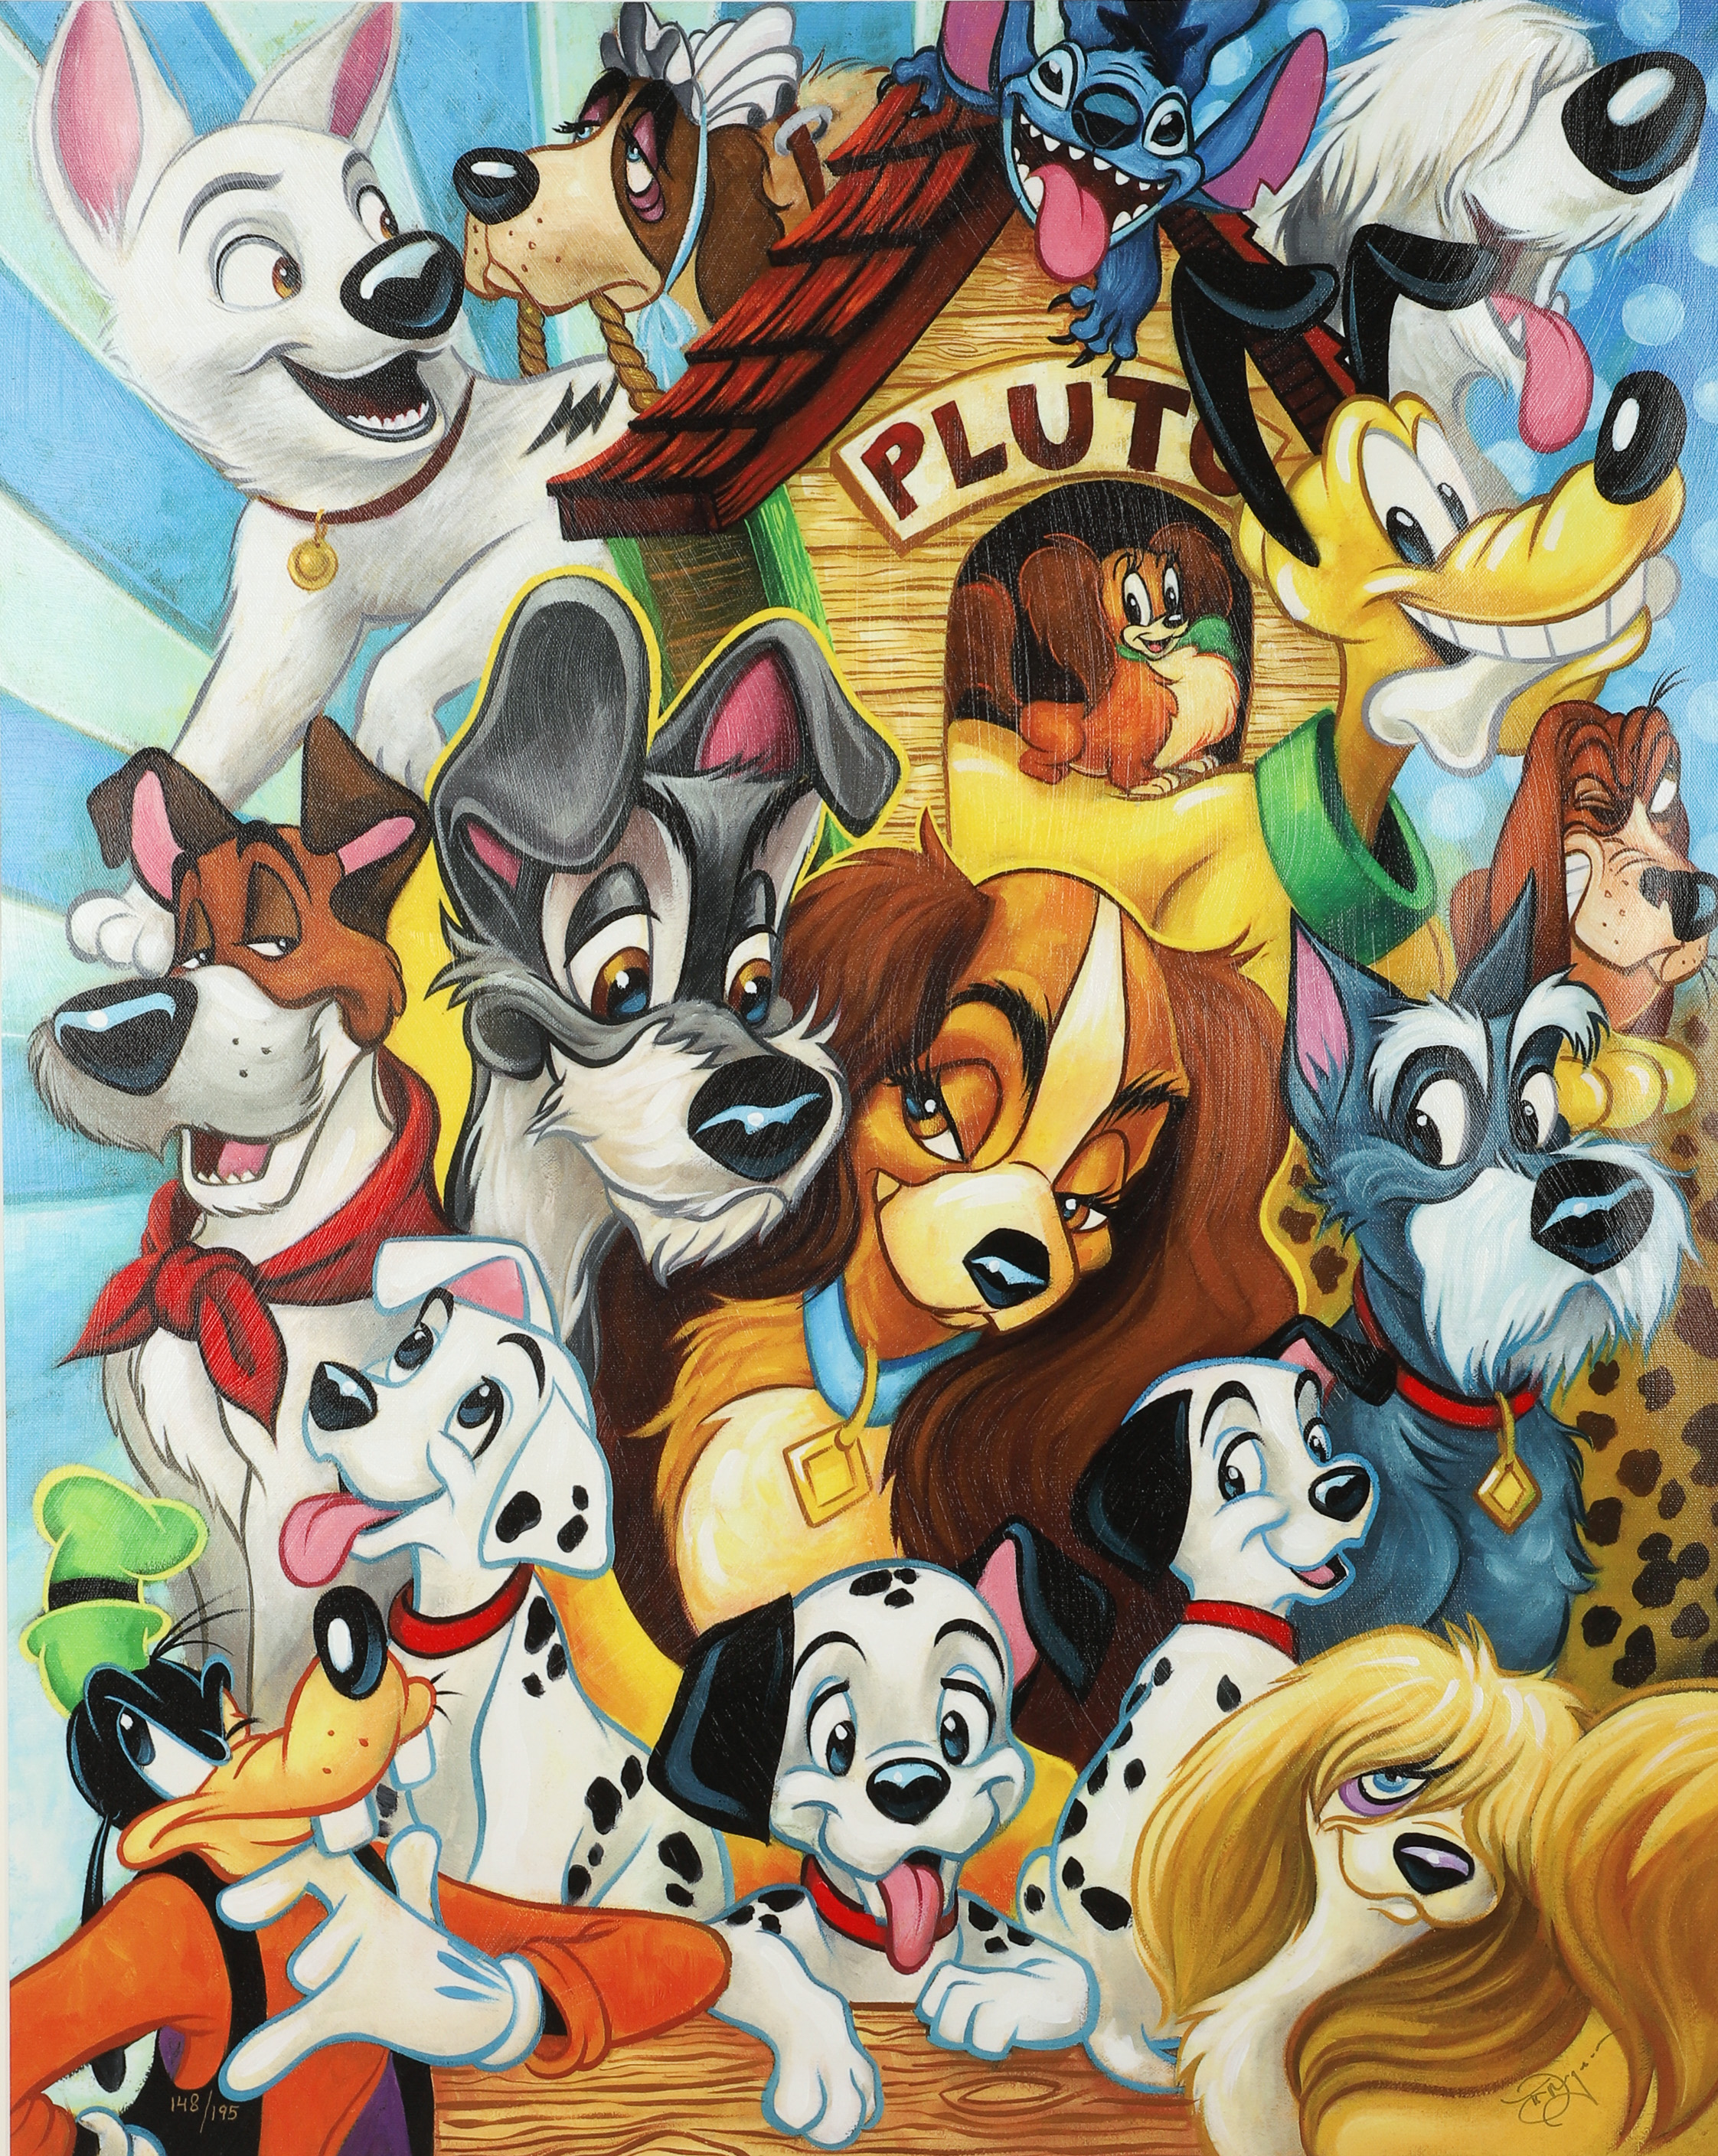 Large Walt Disney print on canvas